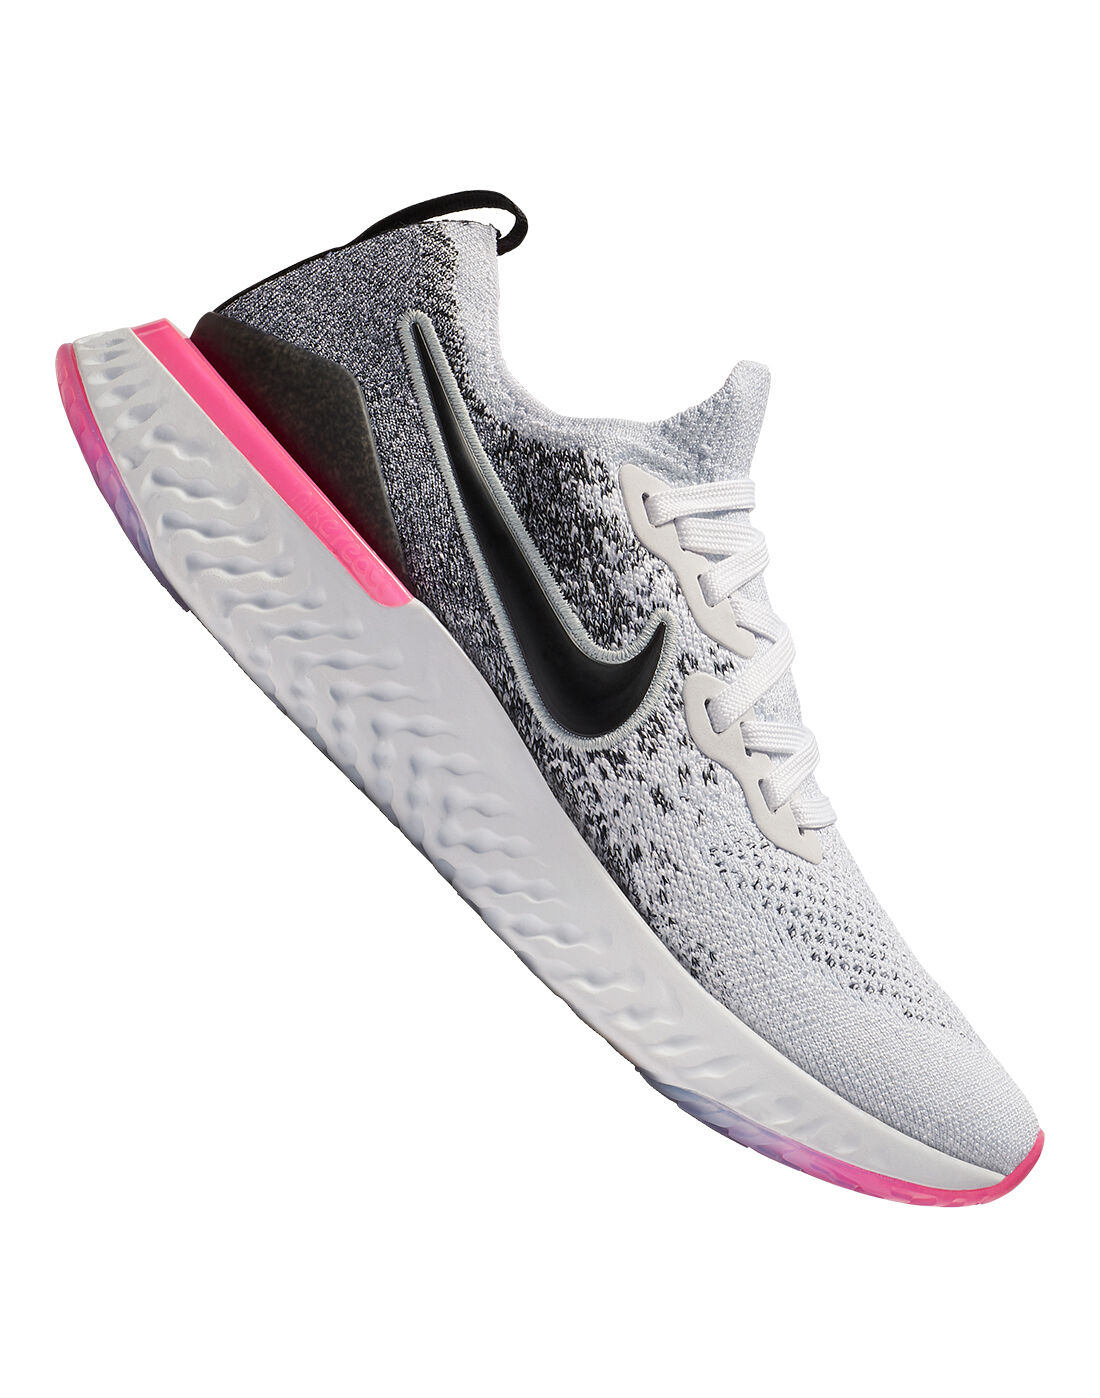 Grey \u0026 Pink Nike Epic React Flyknit 